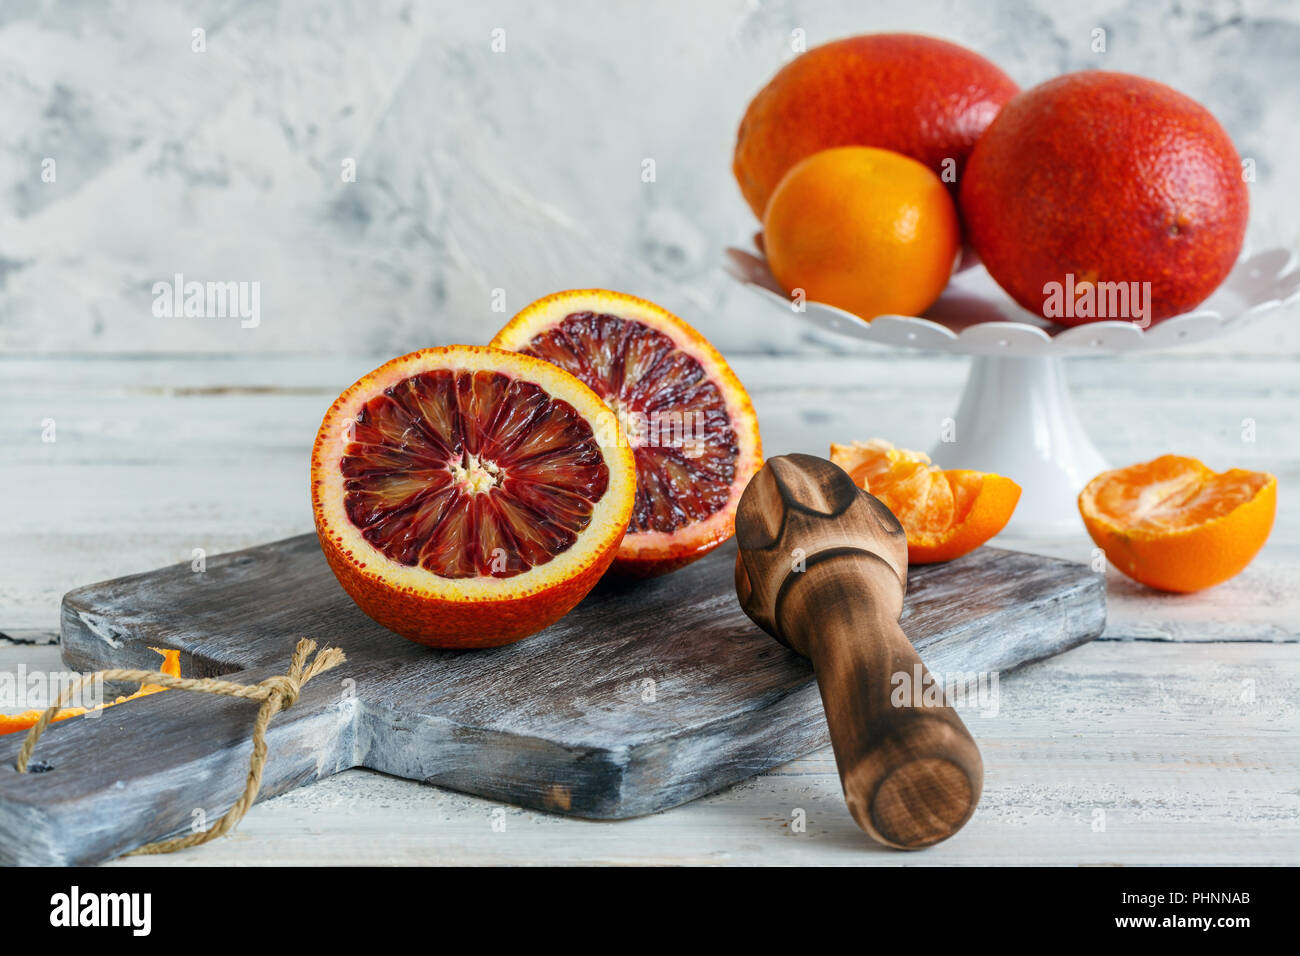 Blood orange cut in half and wooden citrus press. Stock Photo